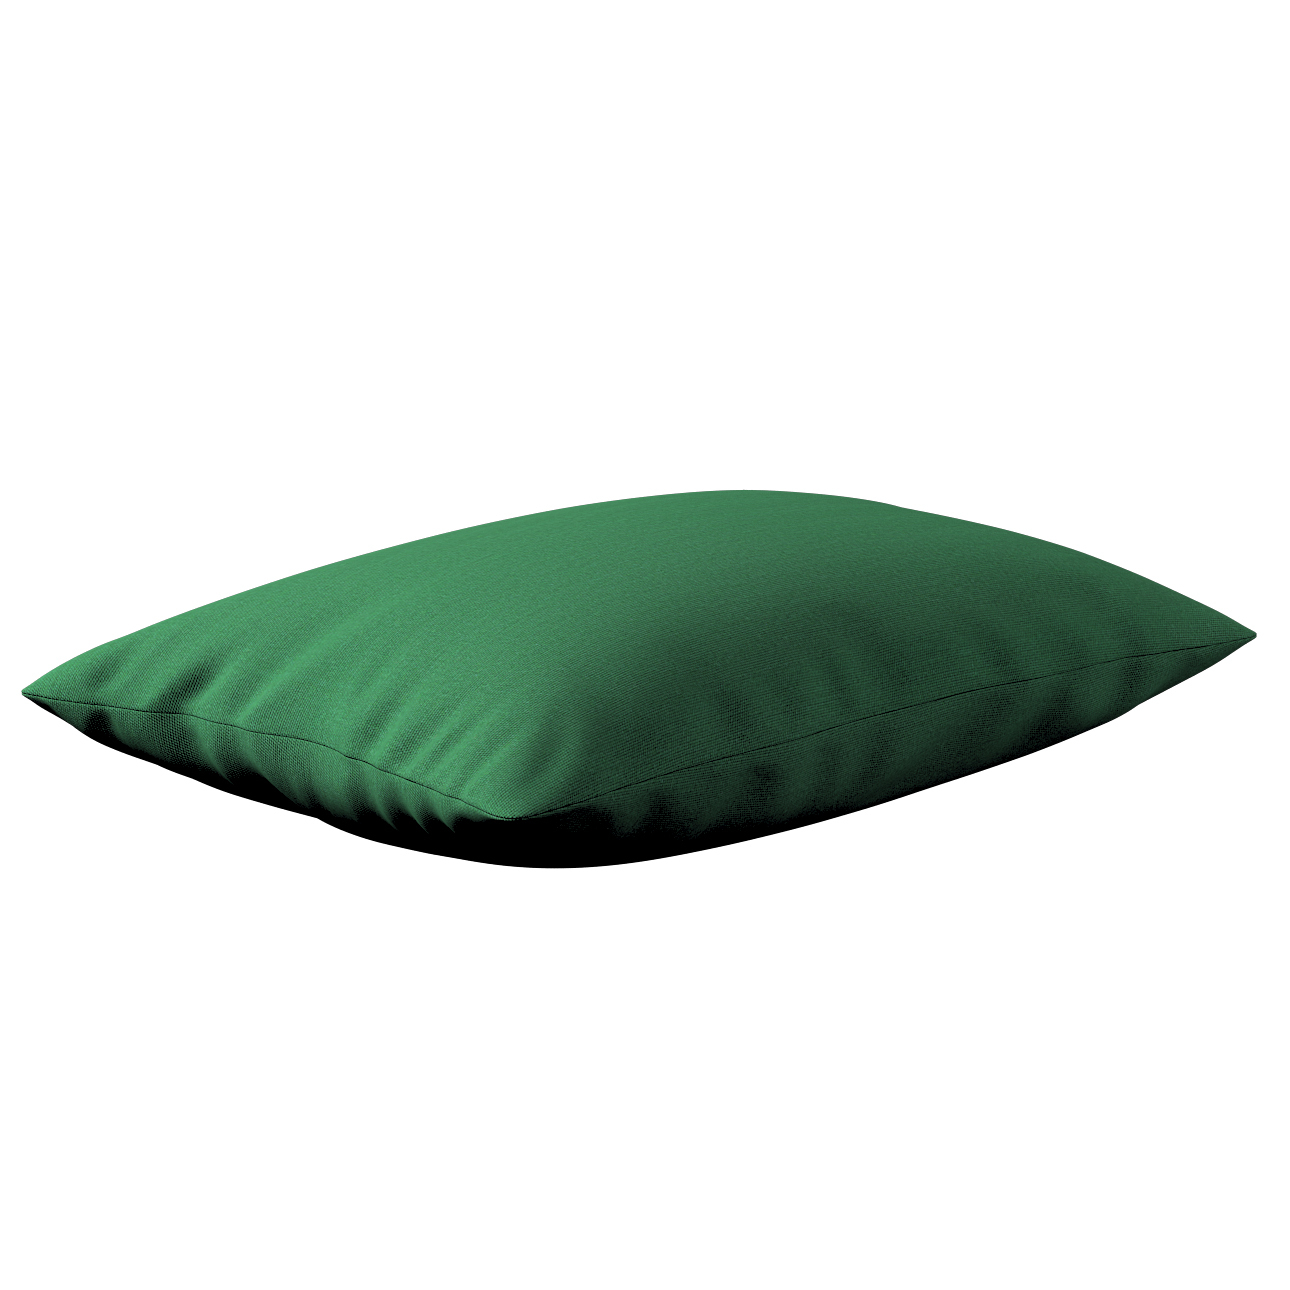 Kissenhülle Kinga rechteckig, grün, 47 x 28 cm, Loneta (133-18) günstig online kaufen